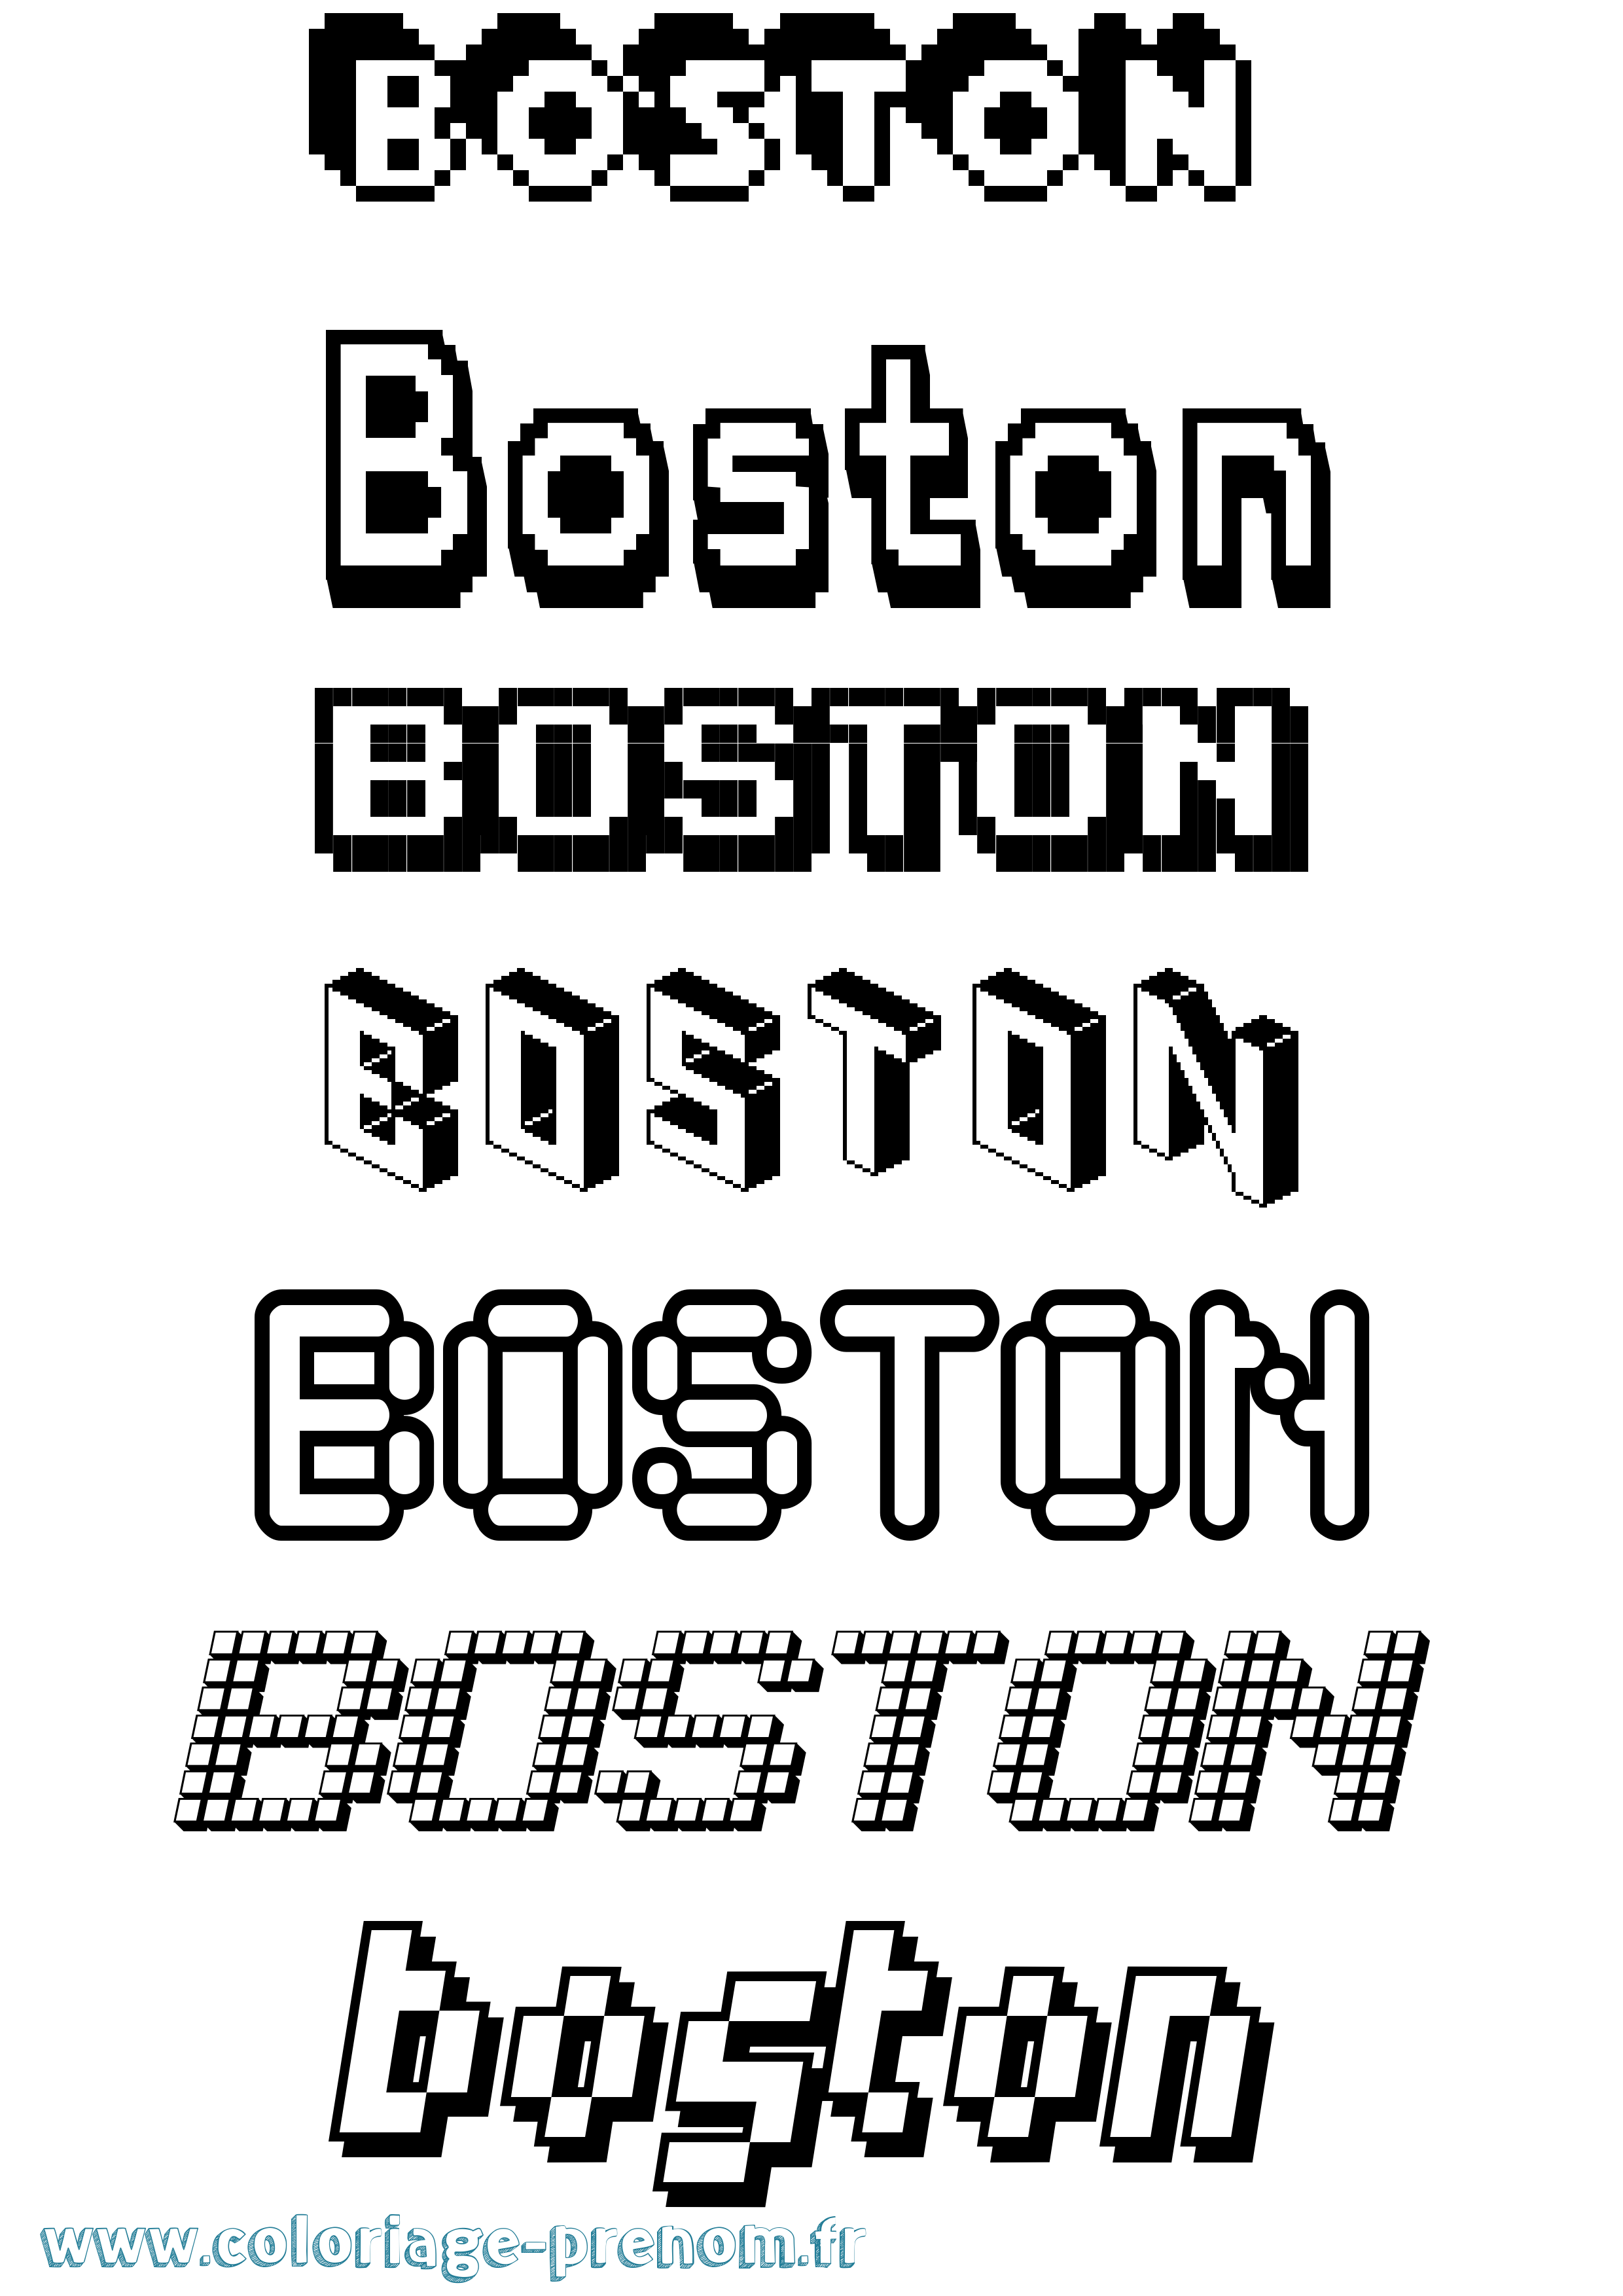 Coloriage prénom Boston Pixel